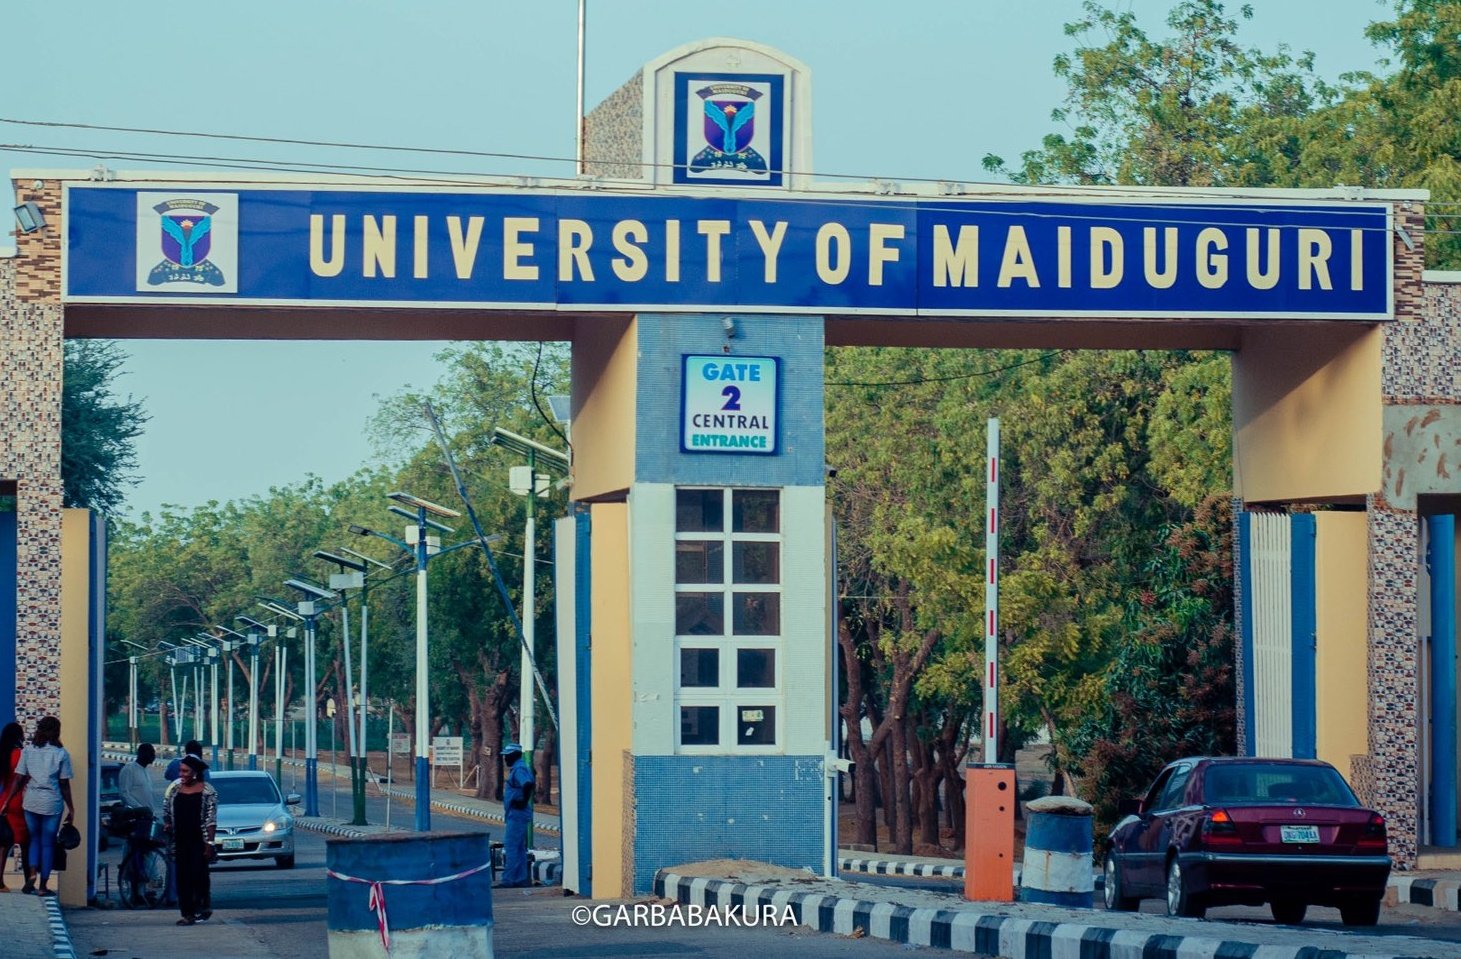 Brief History of University of Maiduguri (UniMaid) - PressPayNg Blog